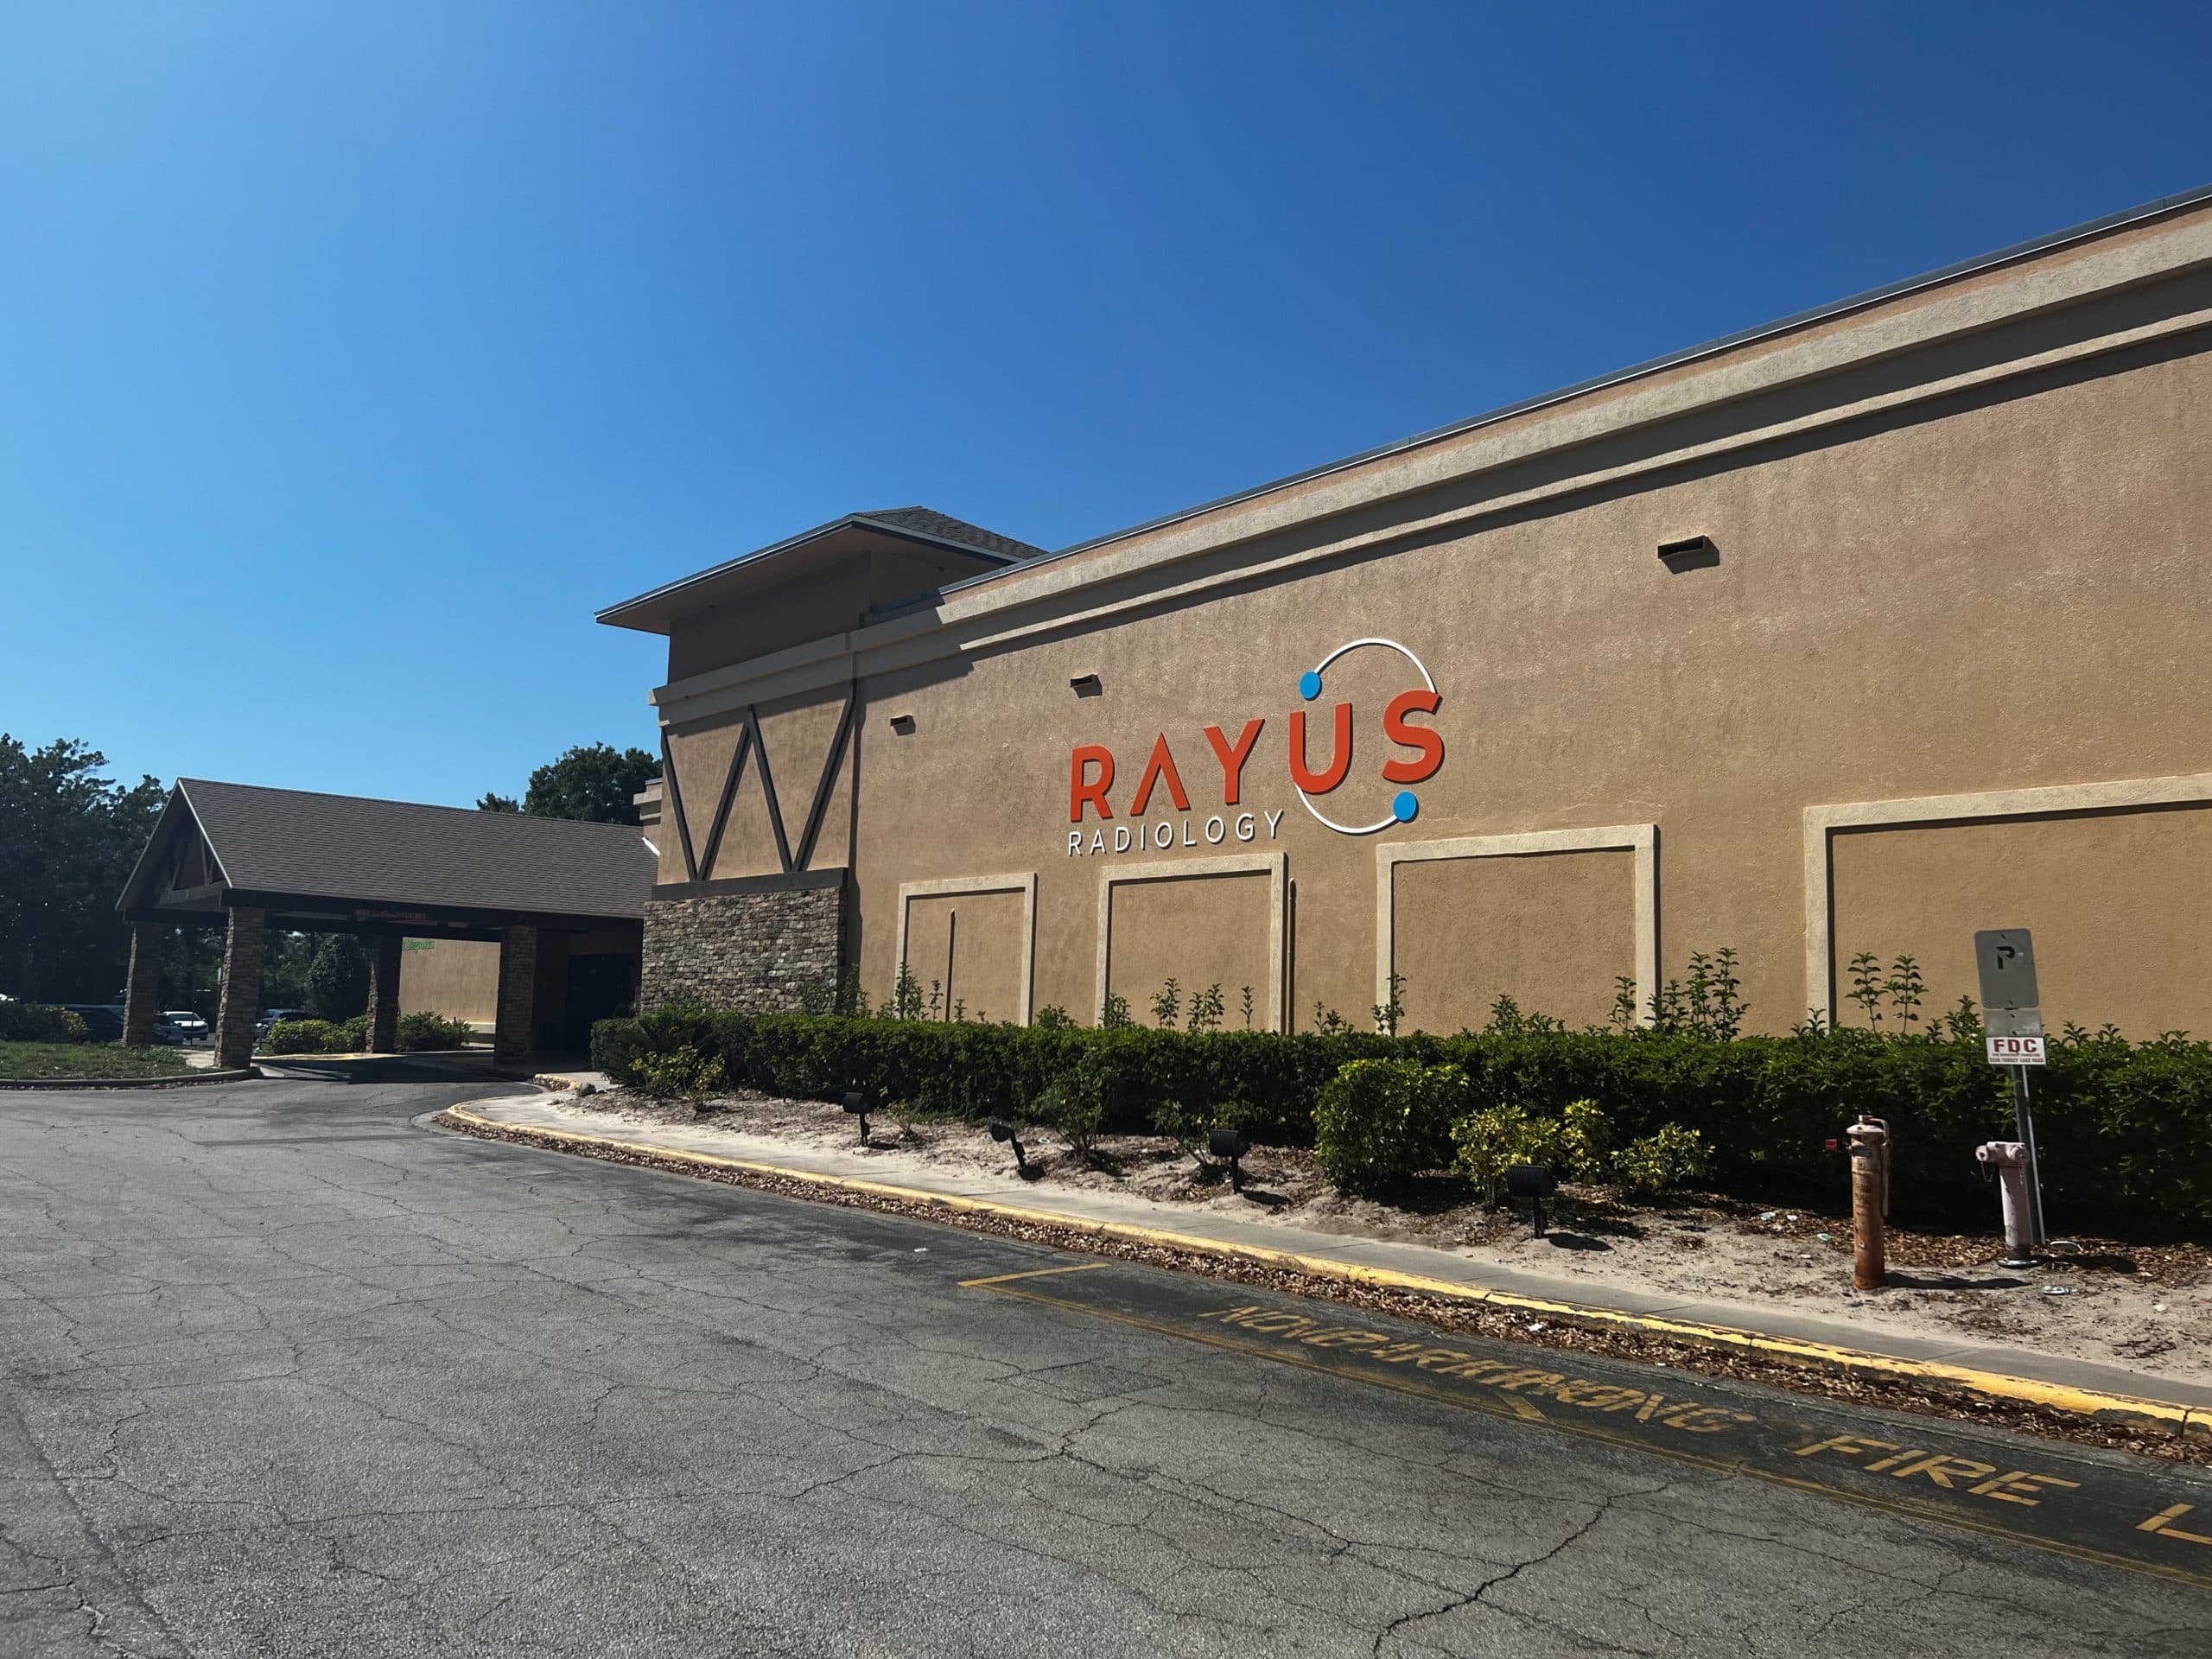 RAYUS in Orlando, Florida - RAYUS Radiology